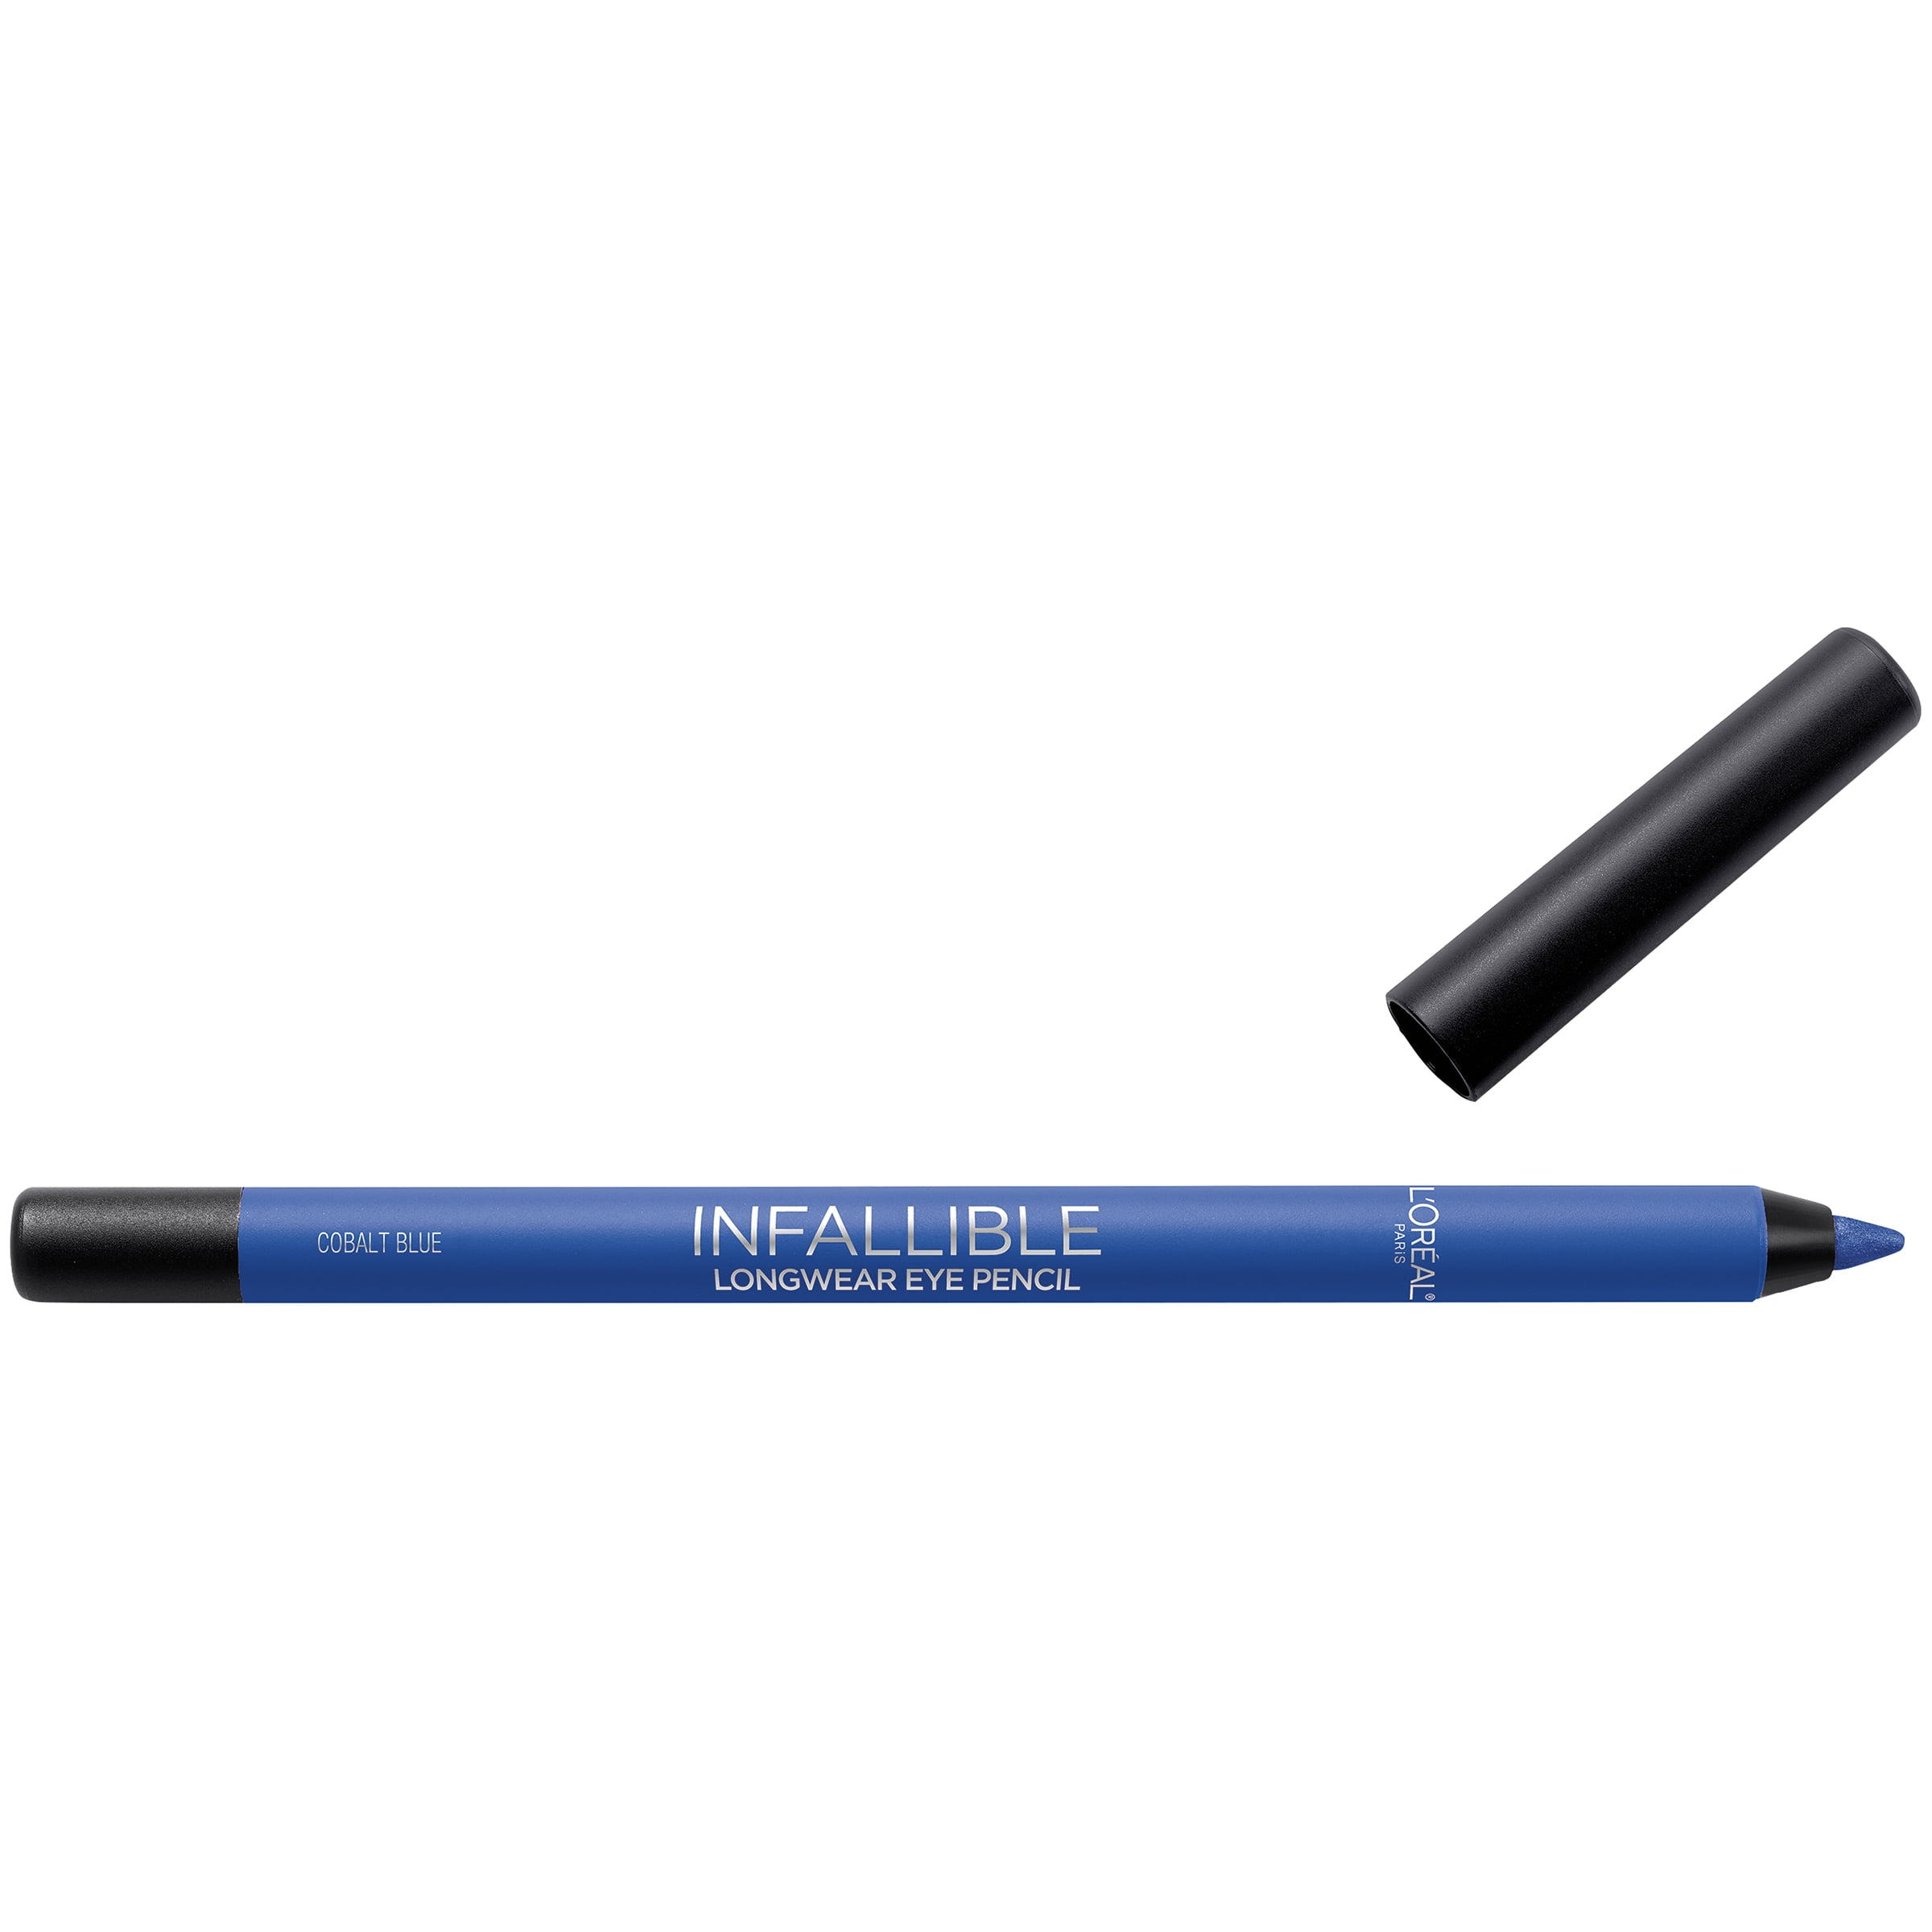 L'Oreal Paris Infallible Pro-Last Waterproof, Up to 24HR Pencil Eyeliner, Cobalt Blue, 0.042 oz.